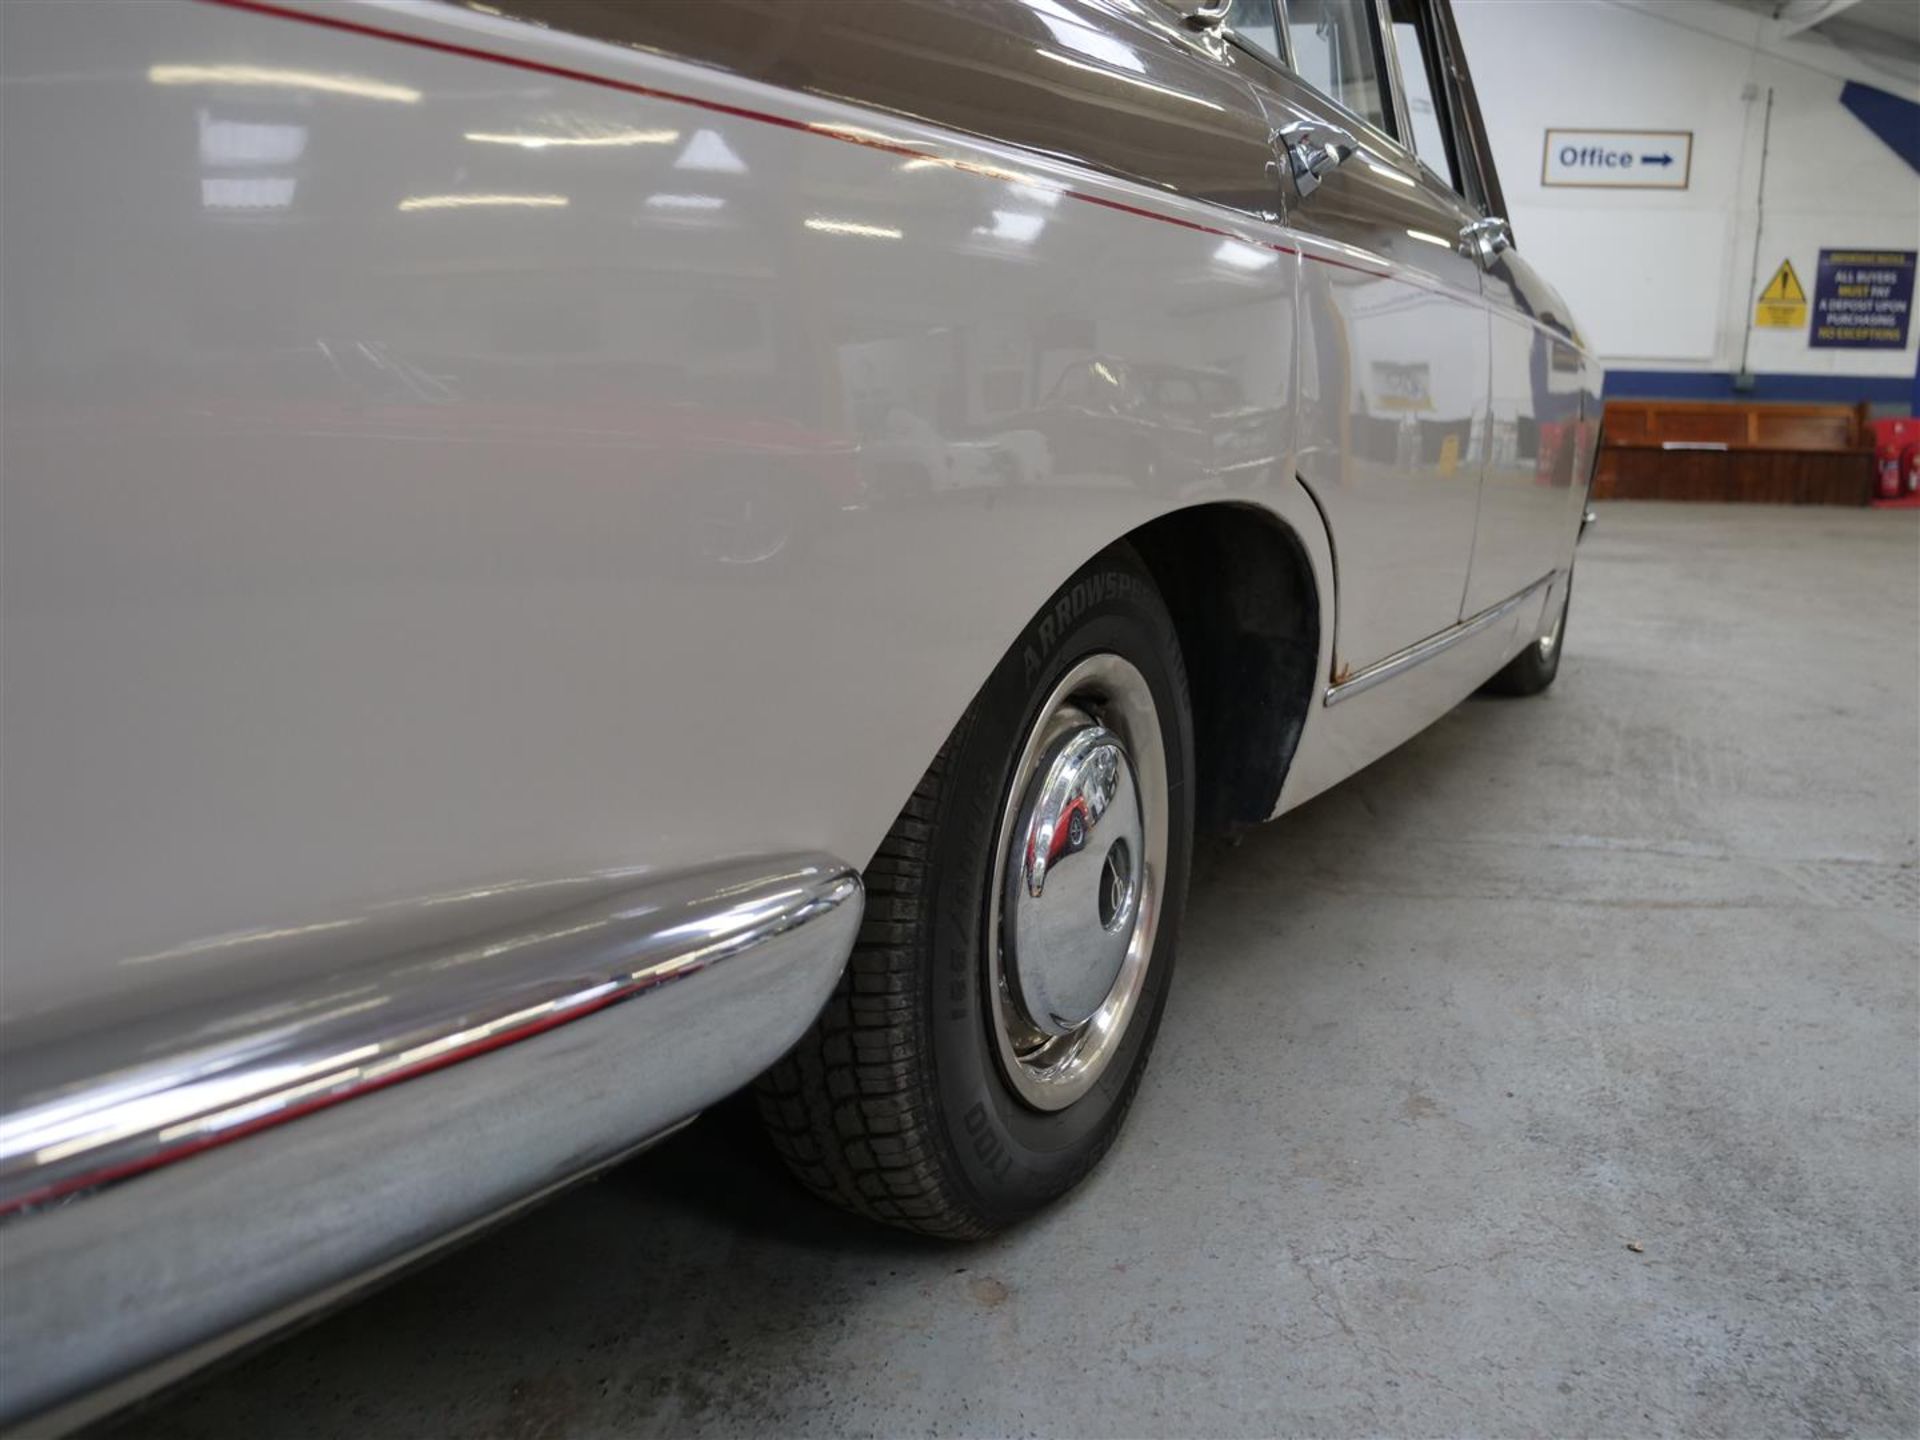 1966 Vanden Plas Princess 4 litre R Auto - Image 9 of 44